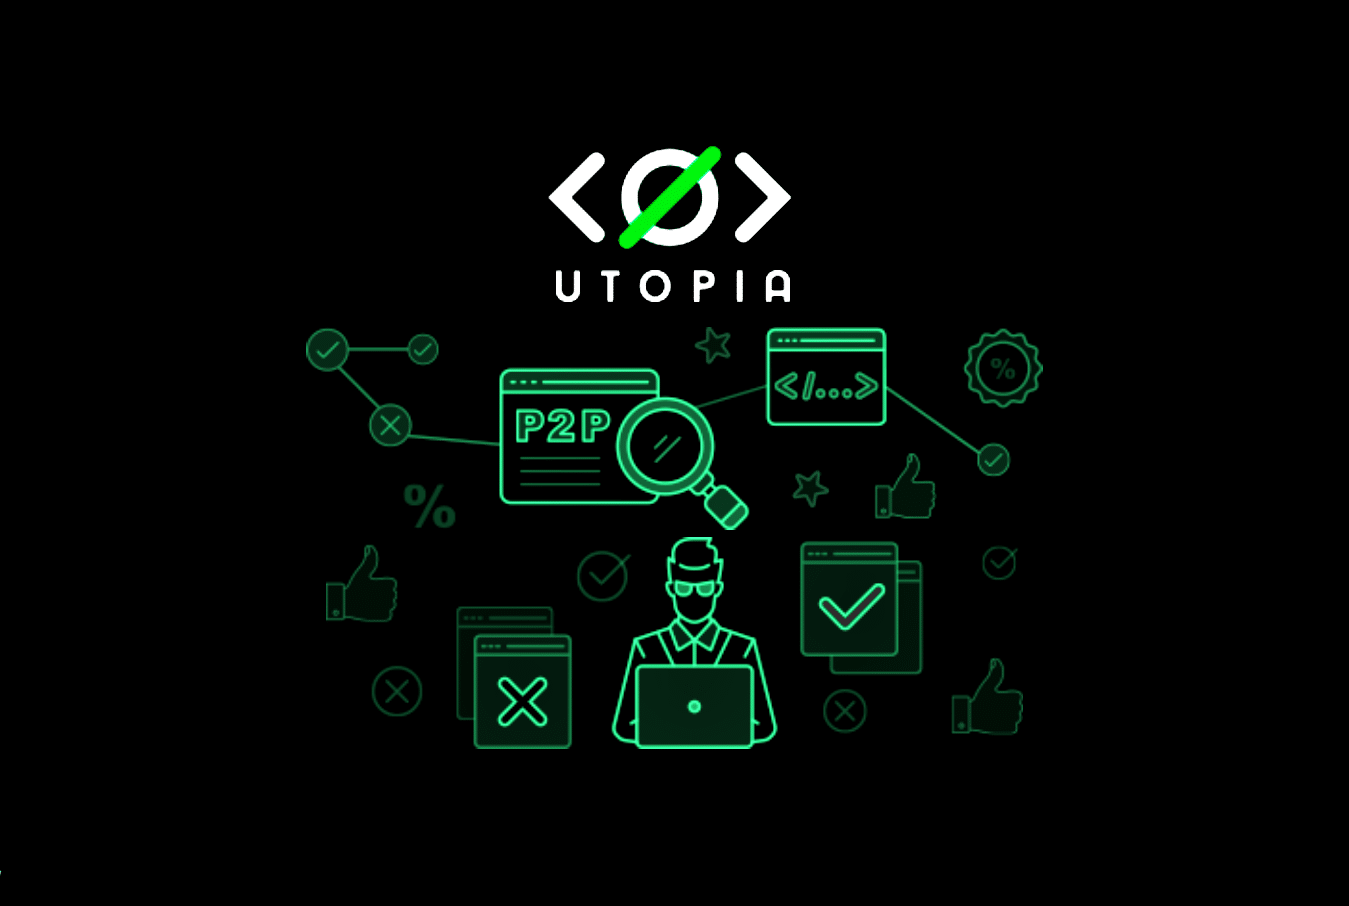 Meet Utopia; a privacy focused decentralized P2P ecosystem